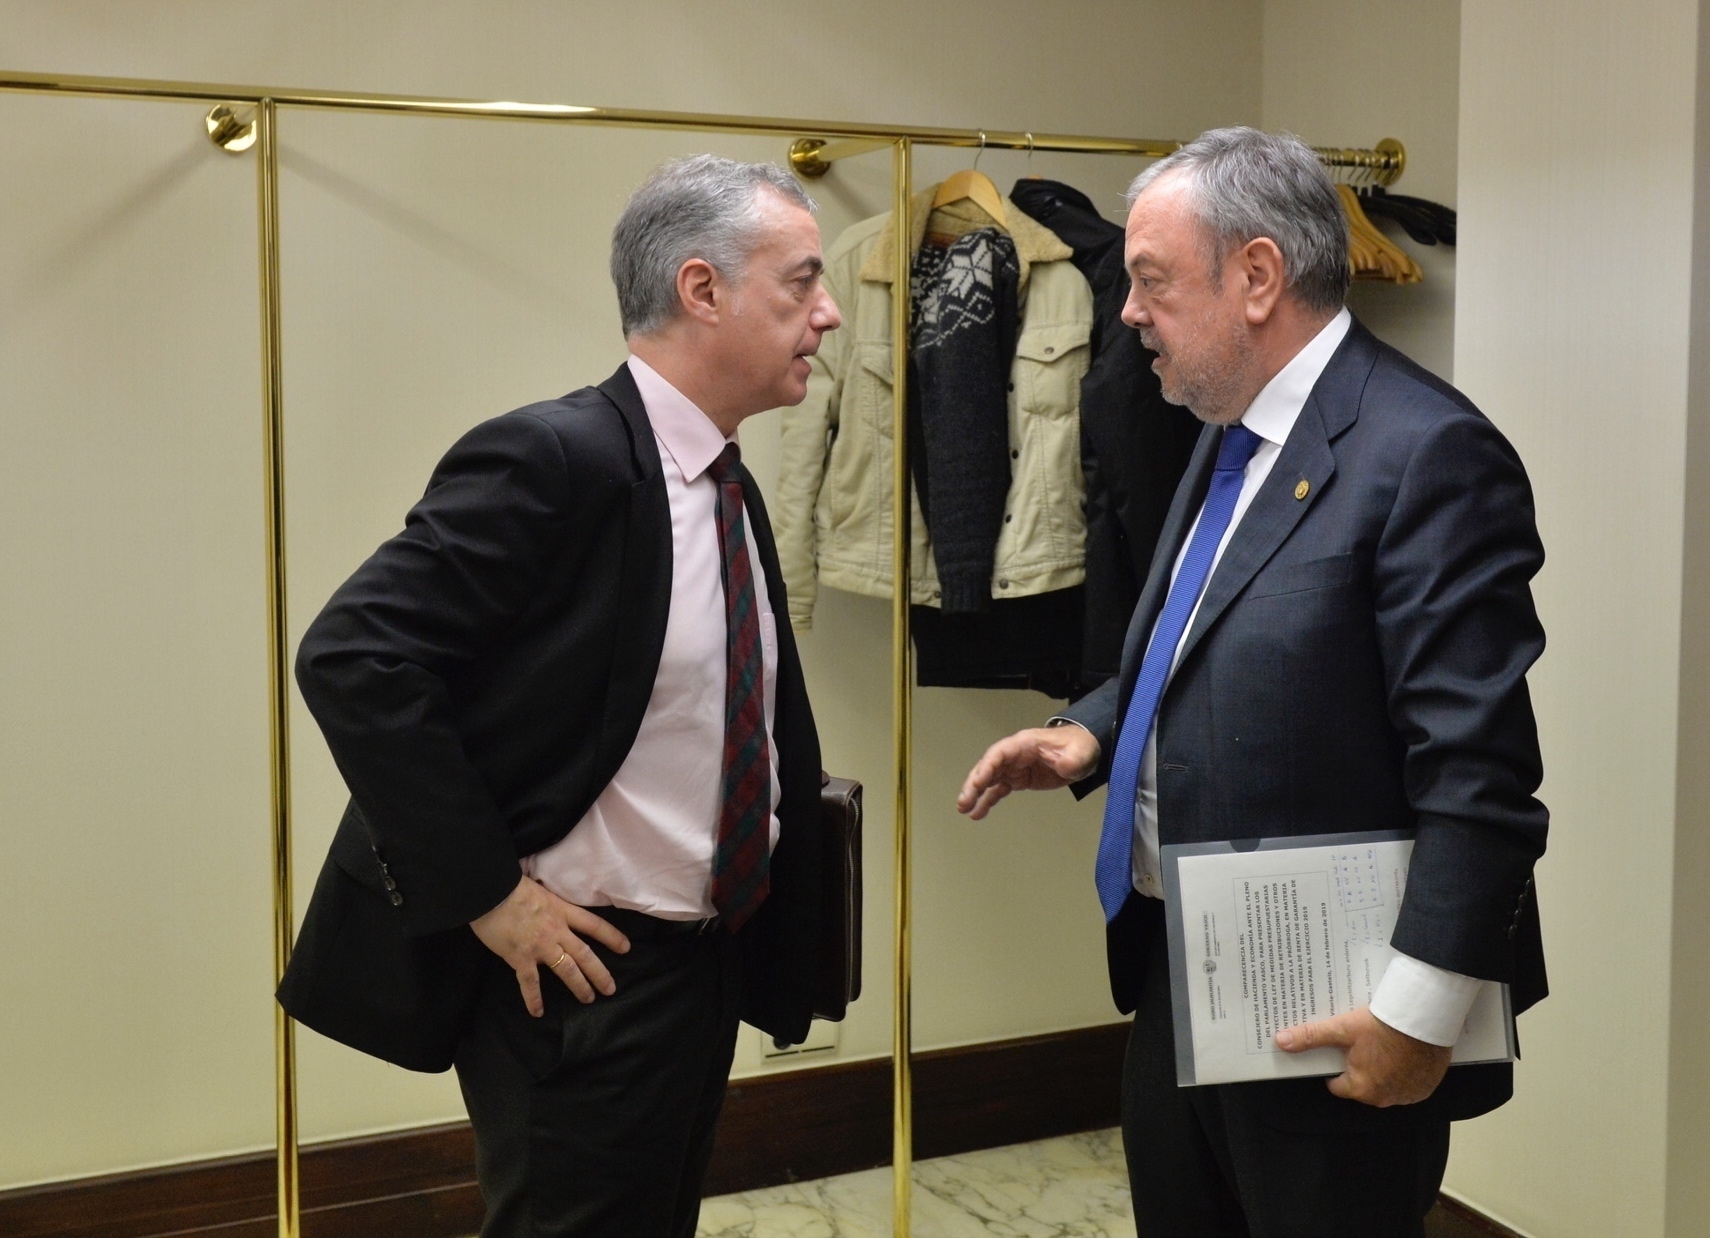 El lehendakari Urkullu y el consejero Pedro Azpiazu conversan en los pasillos del Parlamento Vasco.